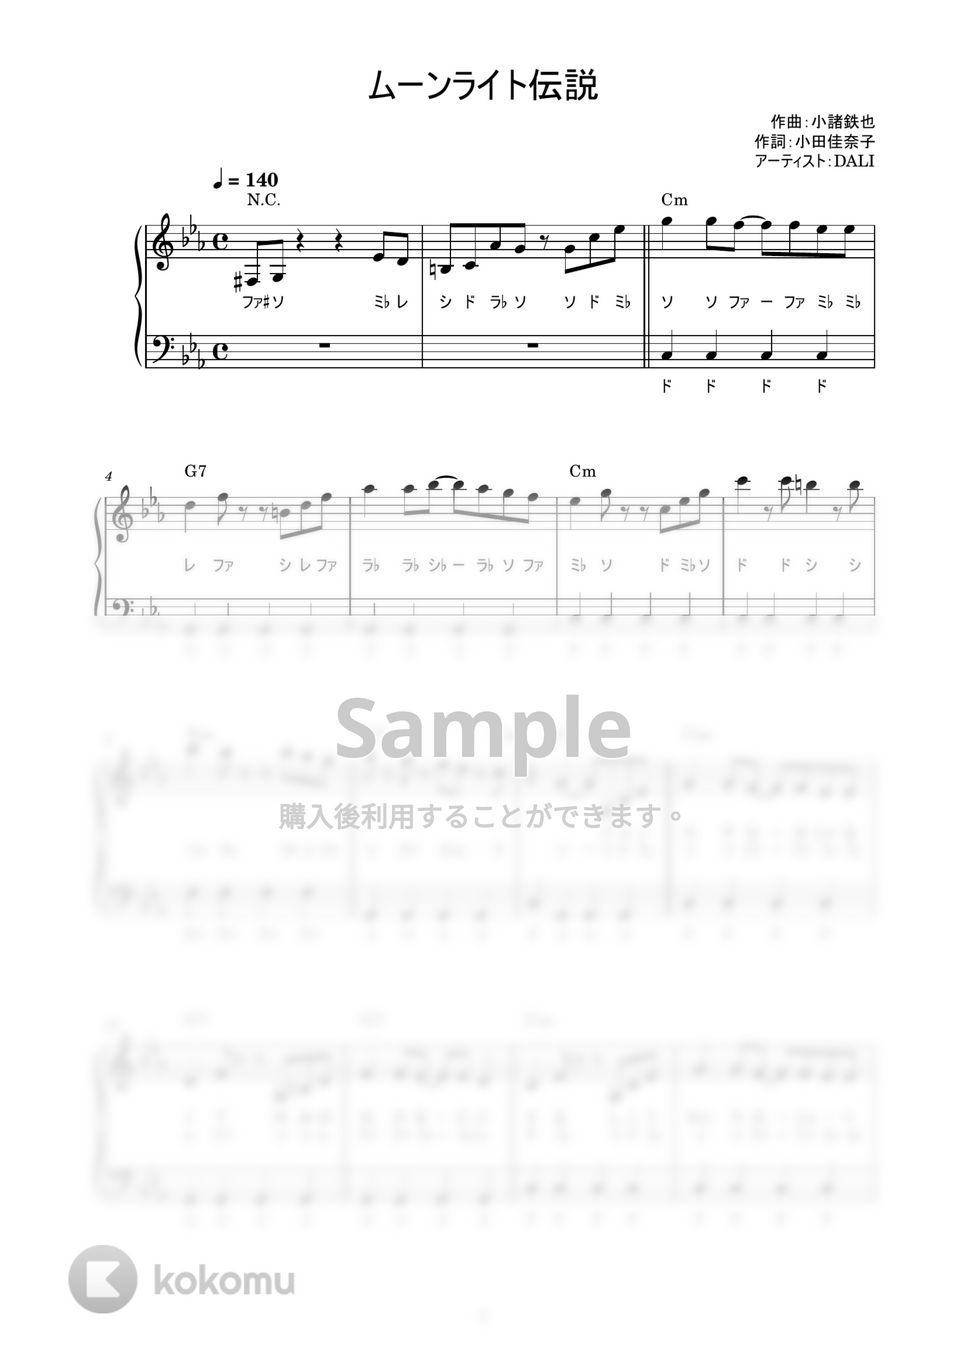 DALI - ムーンライト伝説 (かんたん / 歌詞付き / ドレミ付き / 初心者) by piano.tokyo